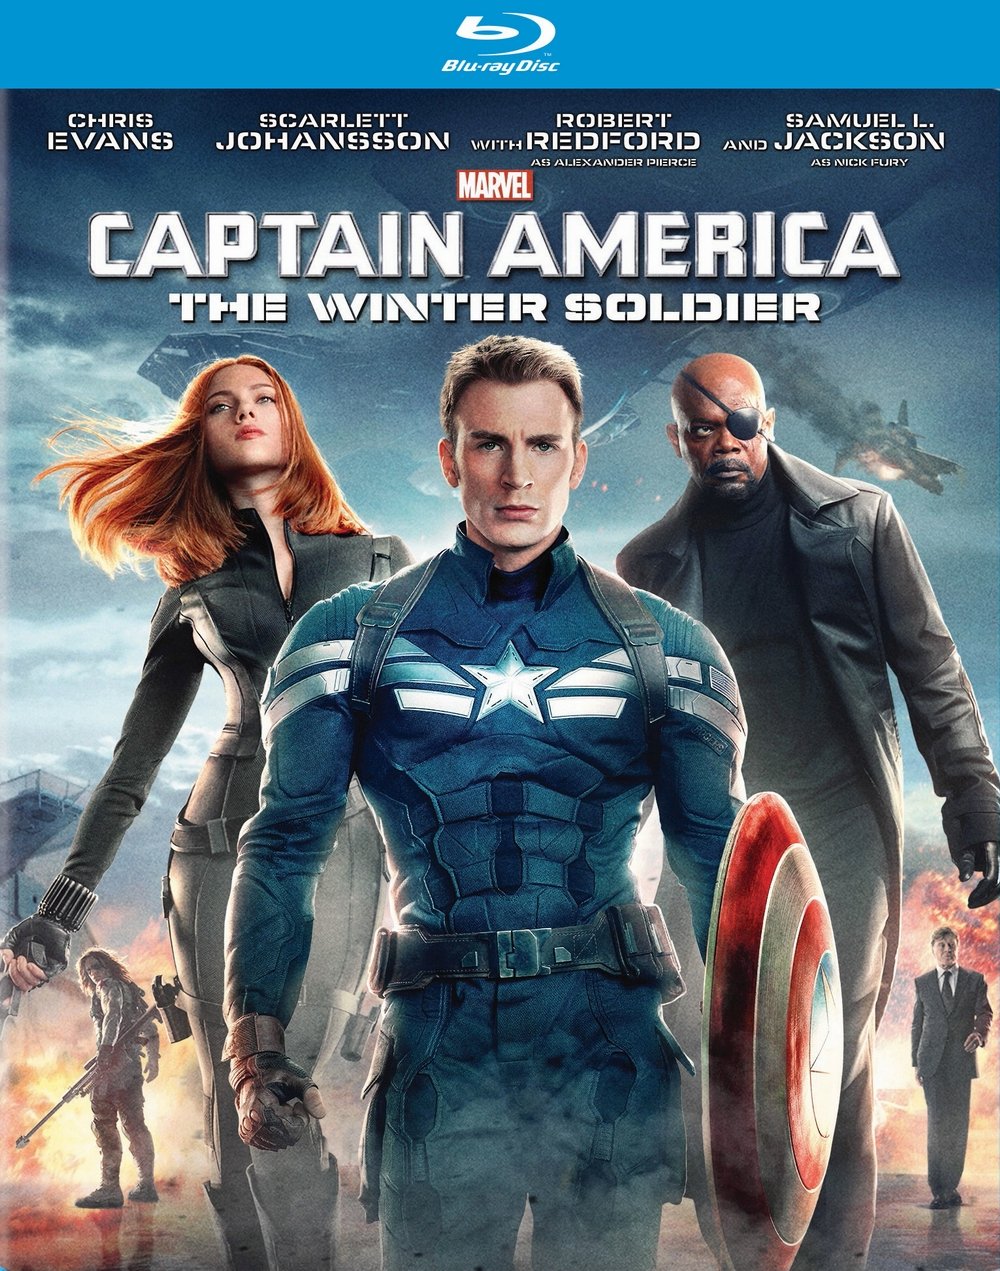 [美国队长2].Captain.America.The.Winter.Soldier.2014.3D.BluRay.1080p.AVC.DTS-HD.MA.7.1-HDSpace   43.61G-1.jpg